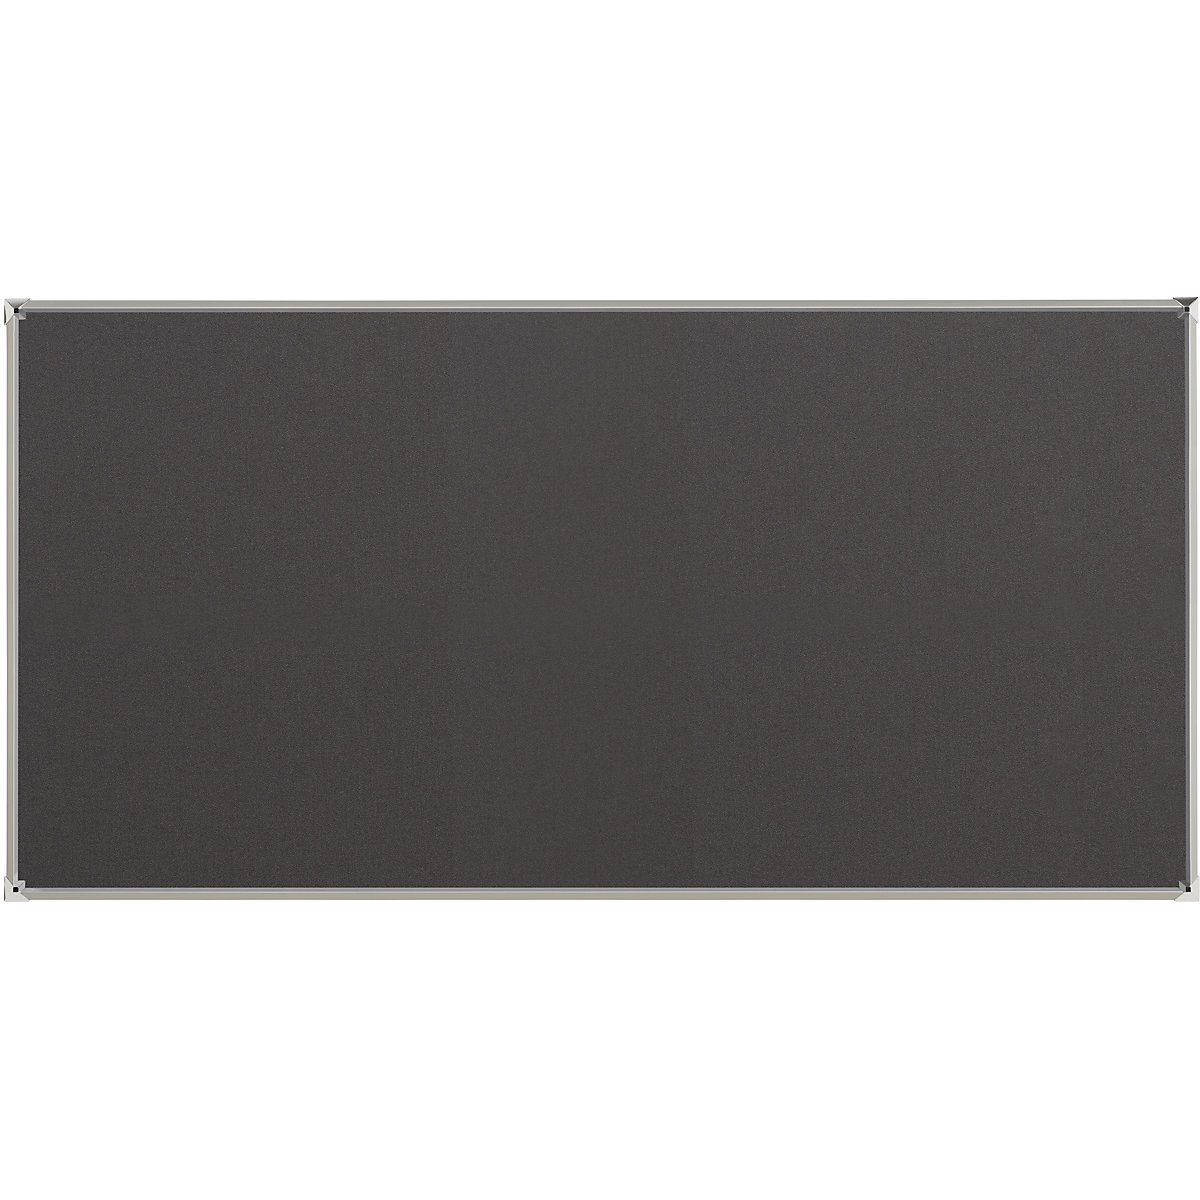 Pinboard with aluminium frame – eurokraft pro, fabric covering, grey, WxH 2400 x 1200 mm-5